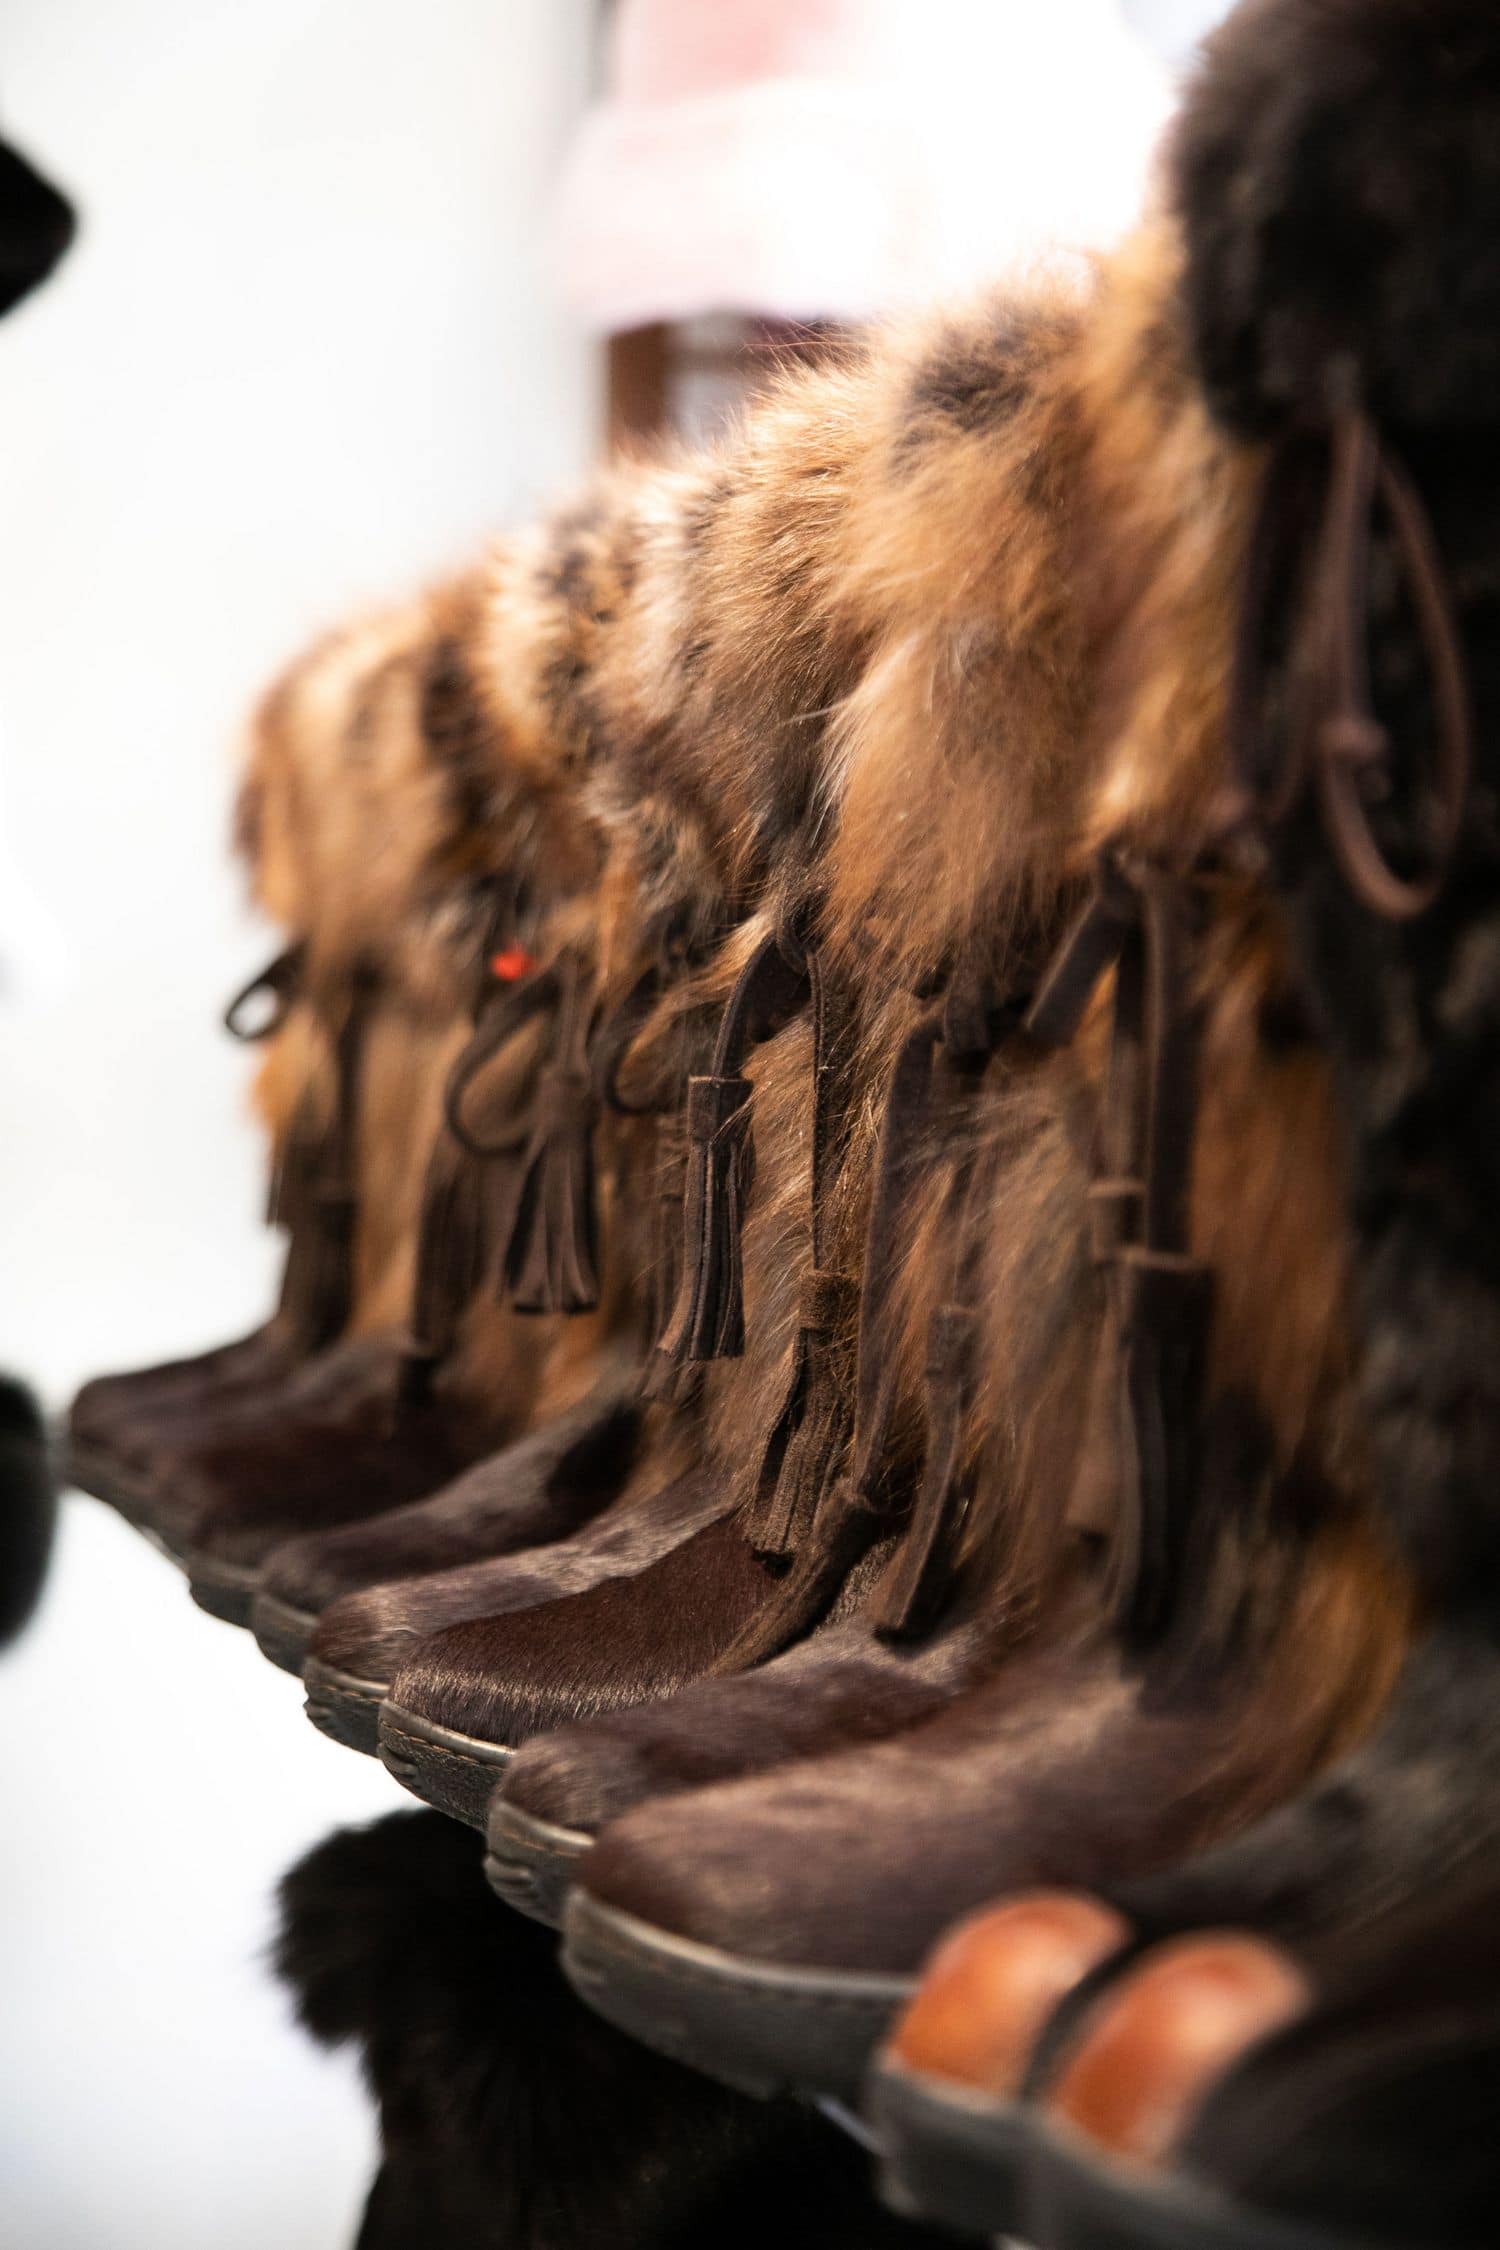 fur boots